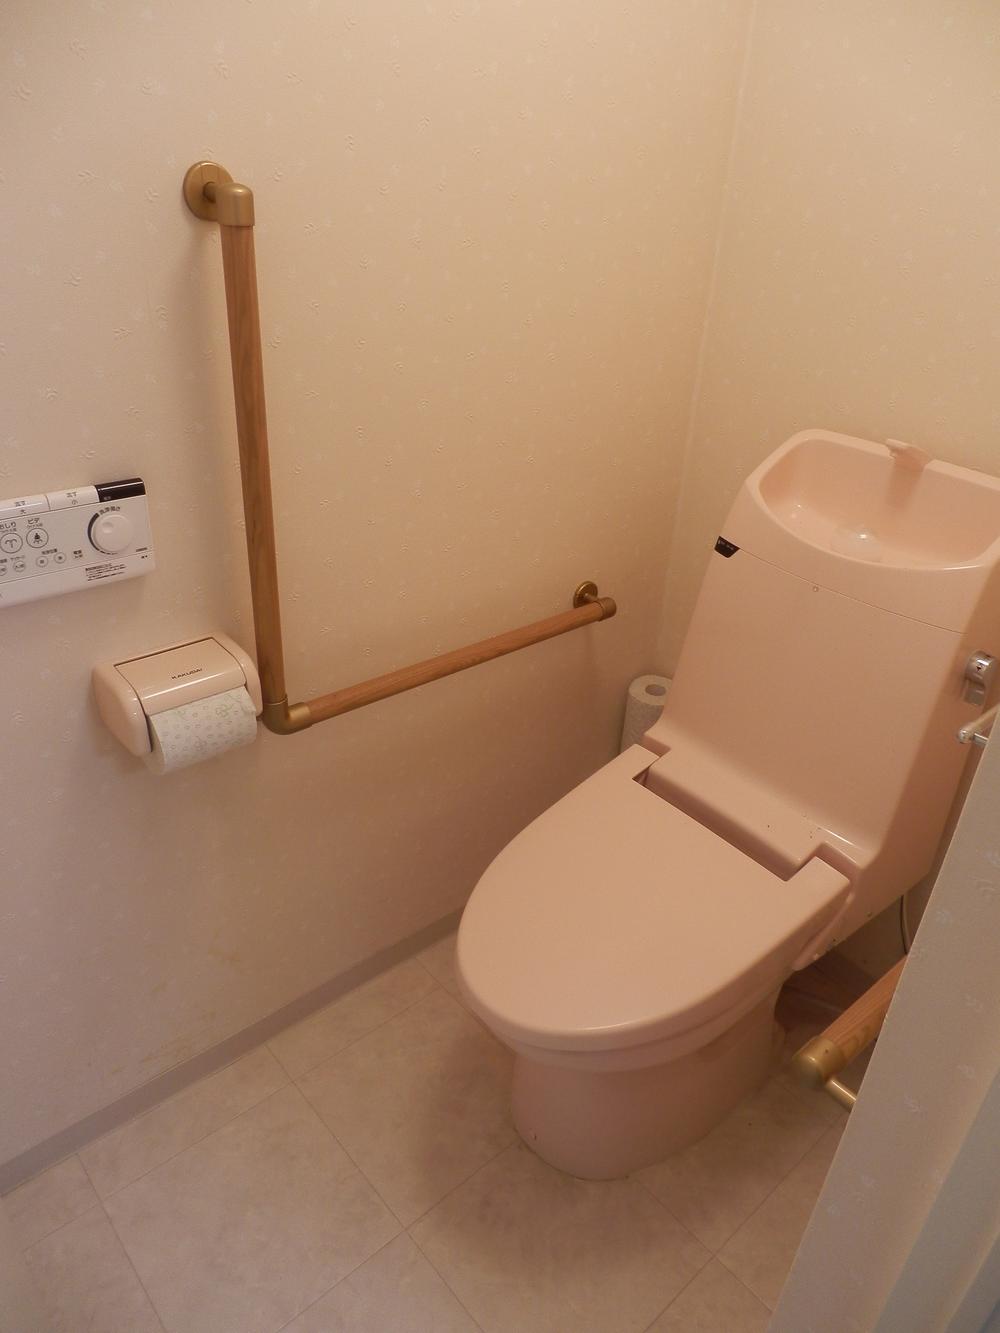 Toilet. With hot toilet seat (2010 exchange)